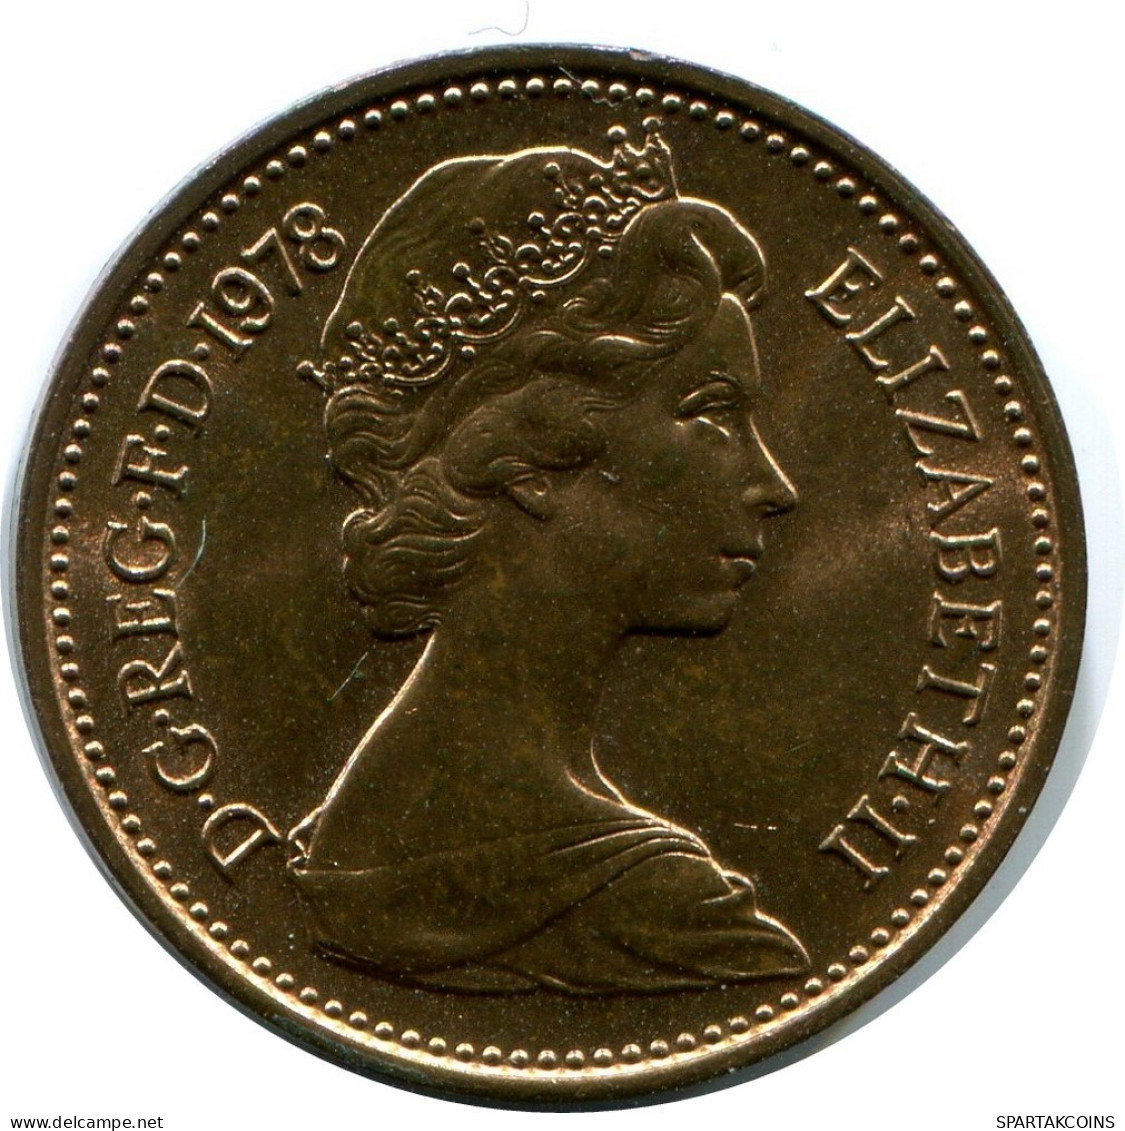 NEW PENNY 1978 UK GRANDE-BRETAGNE GREAT BRITAIN Pièce #AZ042.F.A - 1 Penny & 1 New Penny